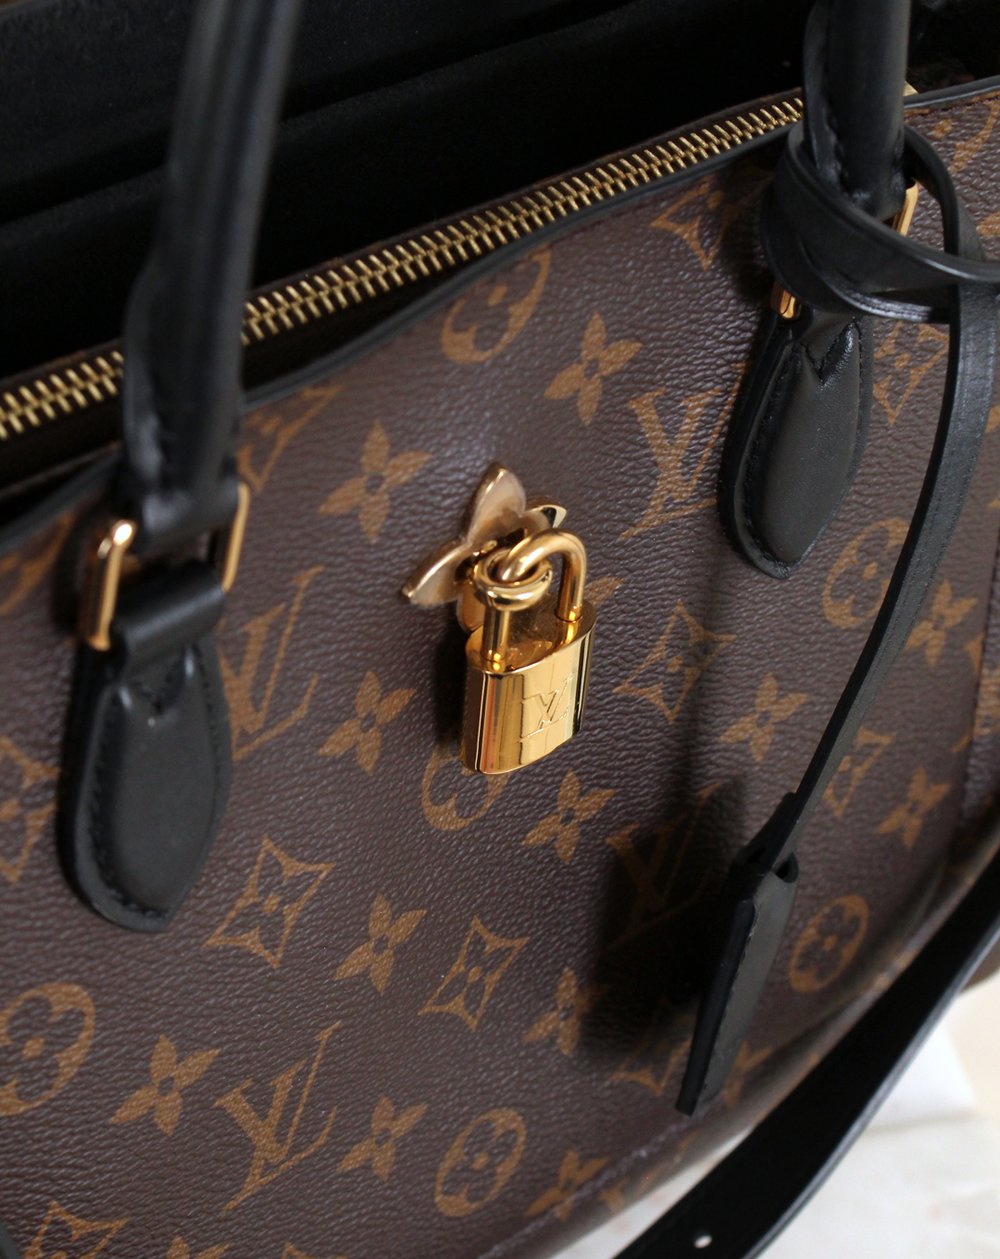 1.4 Louis Vuitton Christian Louboutin Iconoclast Handbag